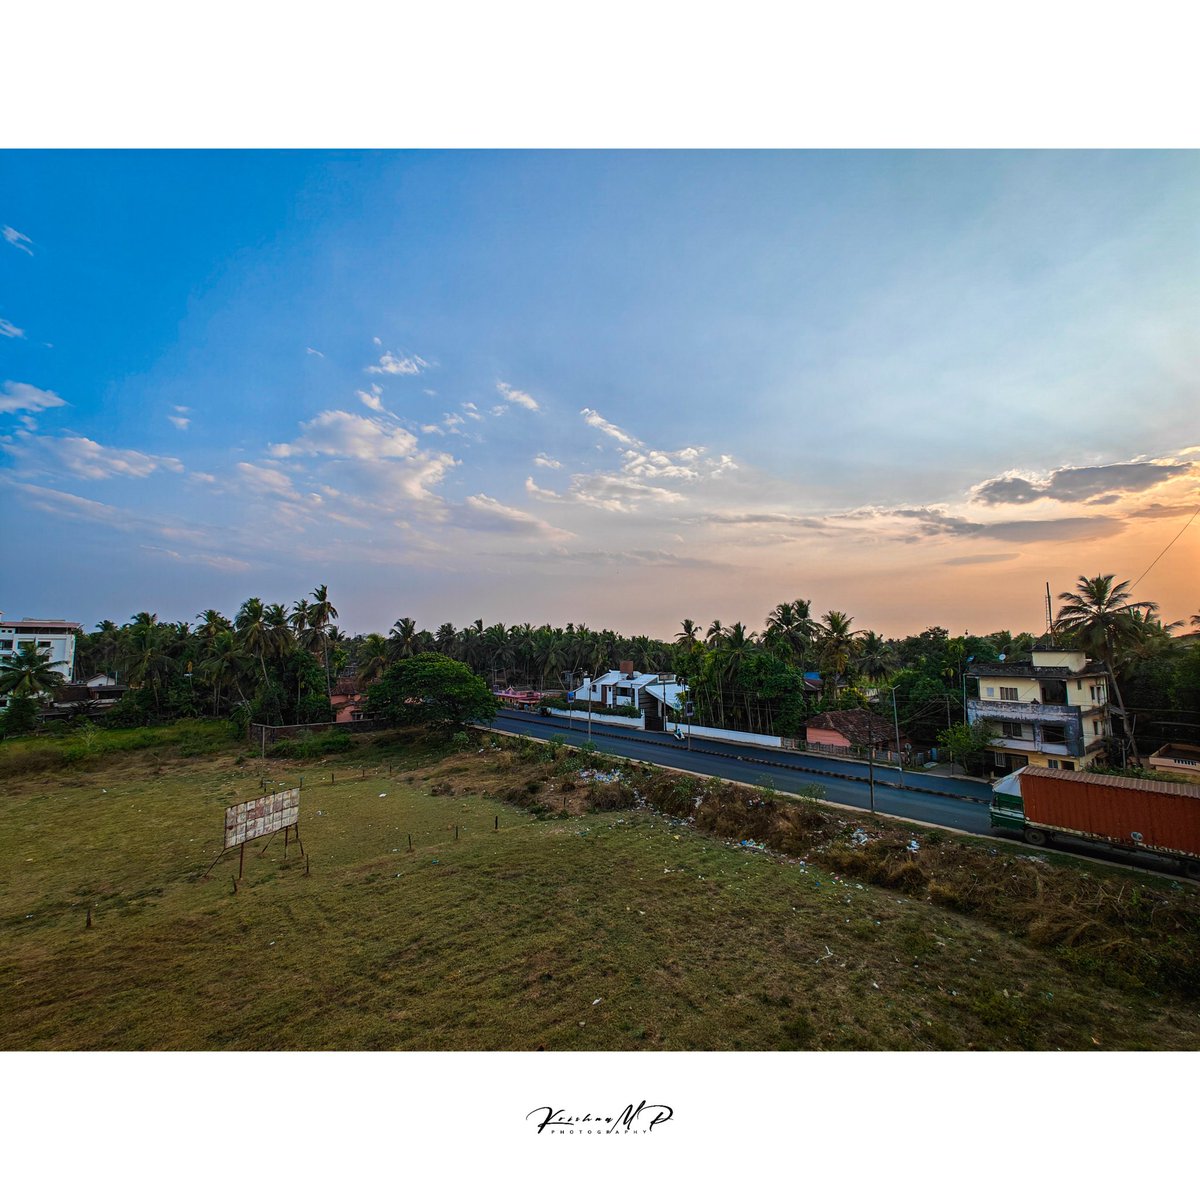 Sunset 🌈
.
.
#sunset_pics #udupidiaries #landsacape #streetphotography #incredibleindia #oneplusindia #shotononeplus #traveludupi #karnatakatourism #netgeoyourshot #krishna_m_p #2023